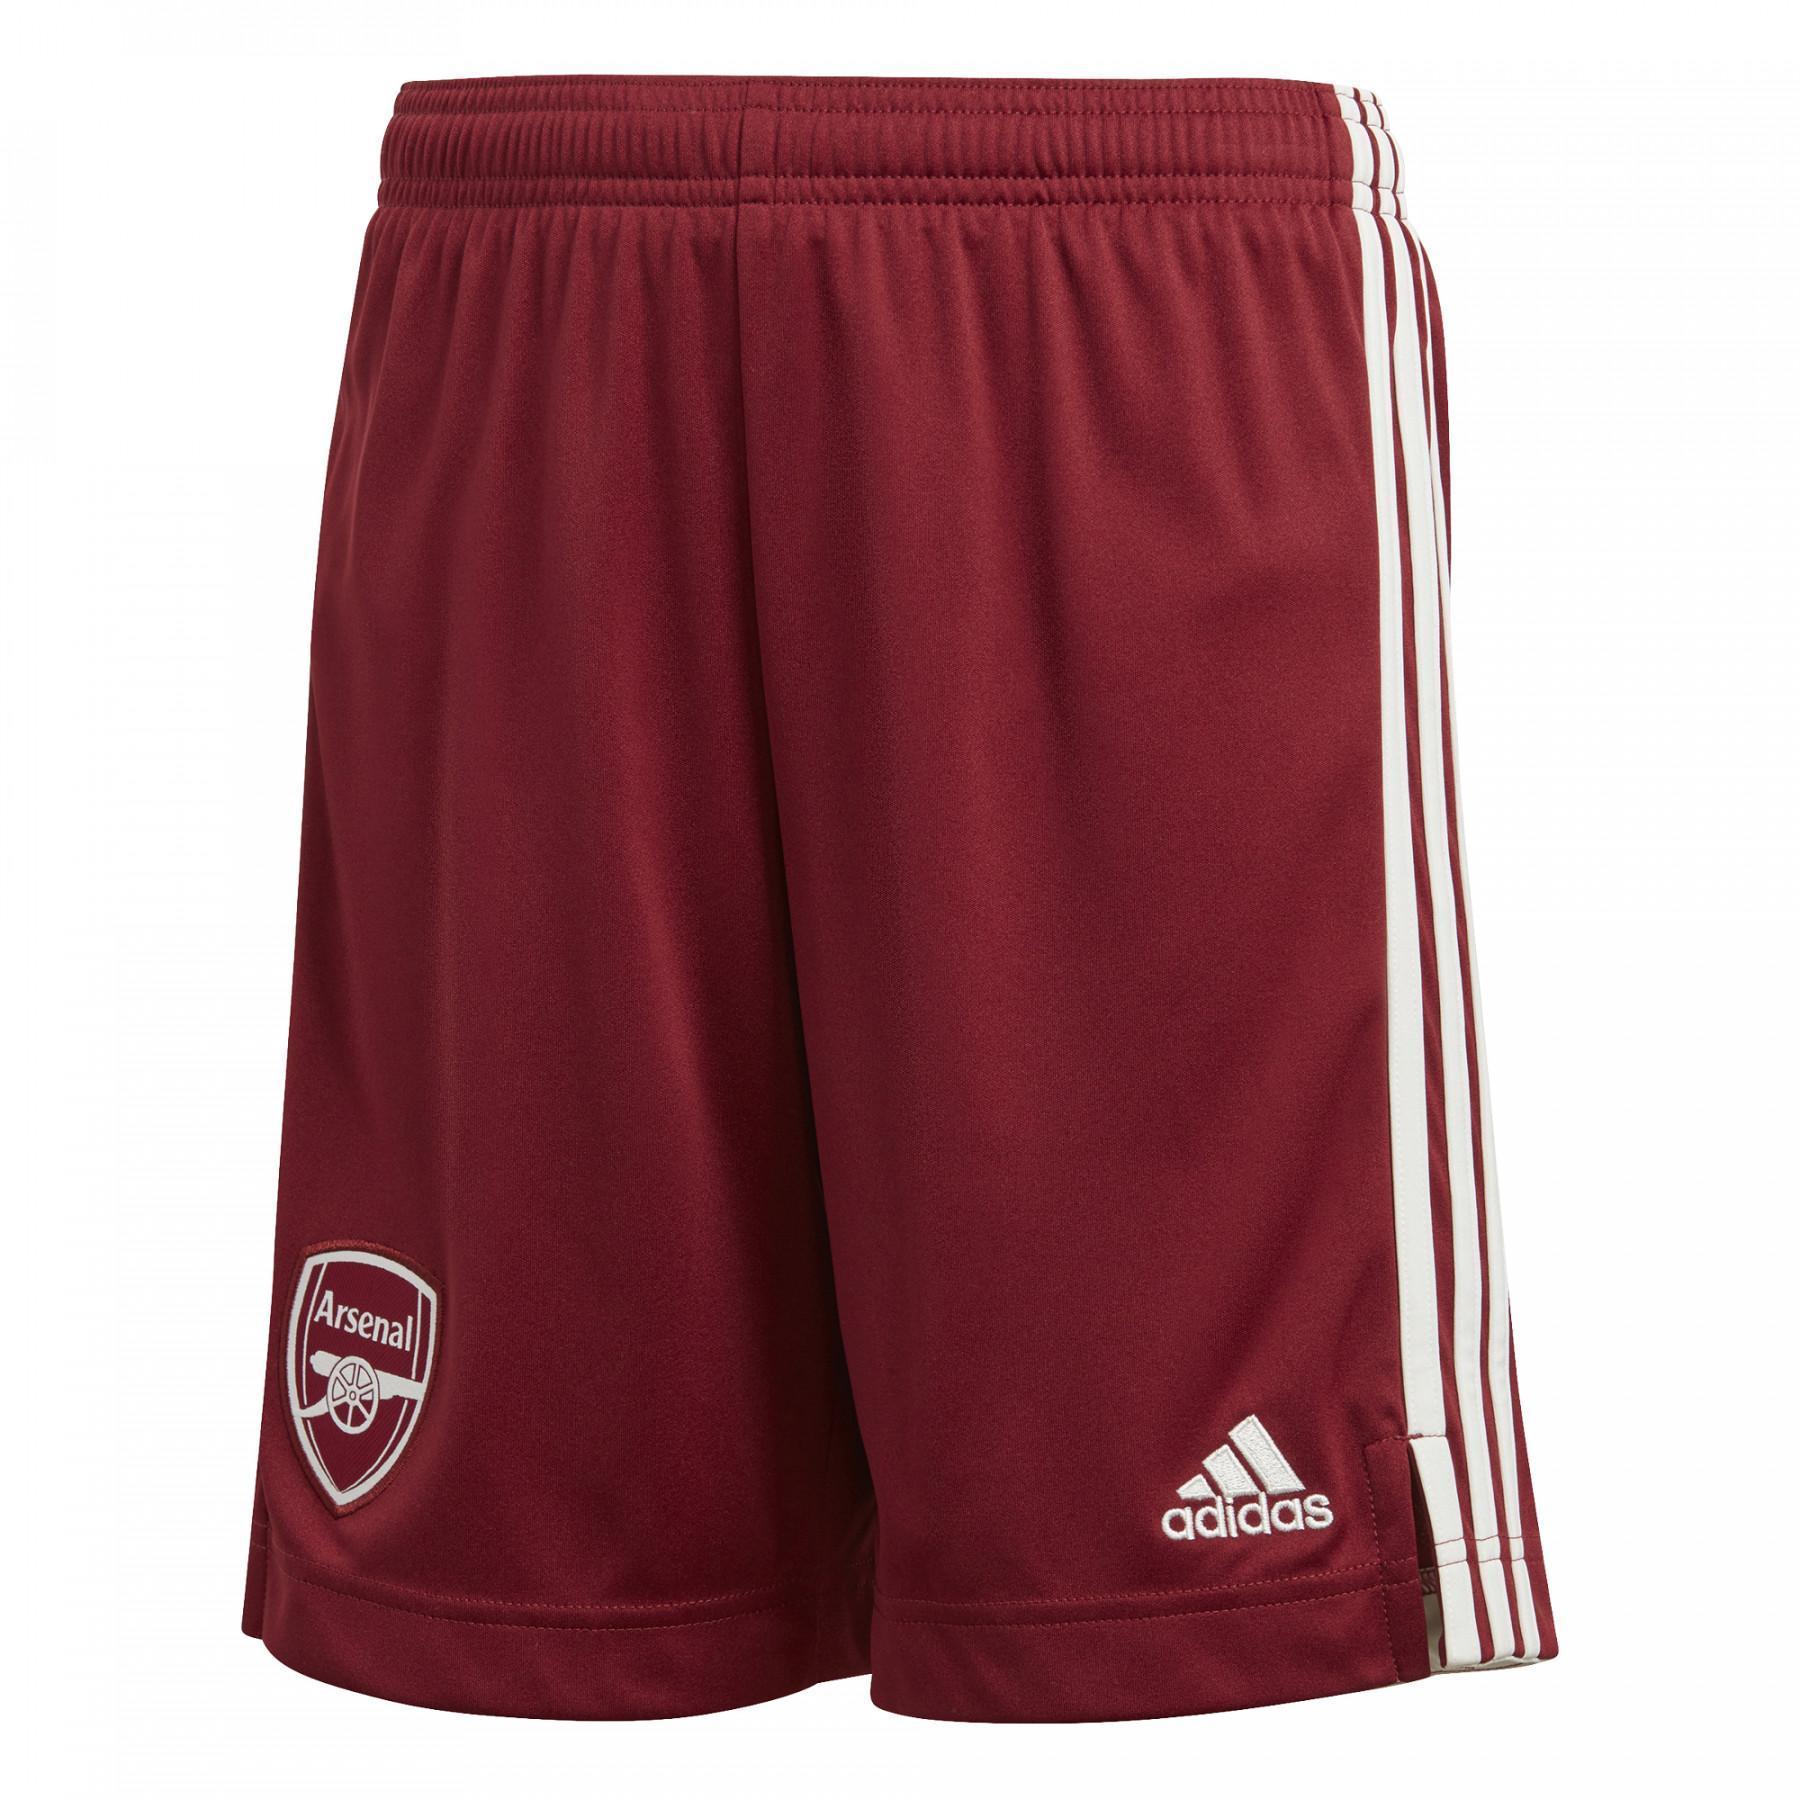 Children's outdoor shorts Arsenal 2020/21